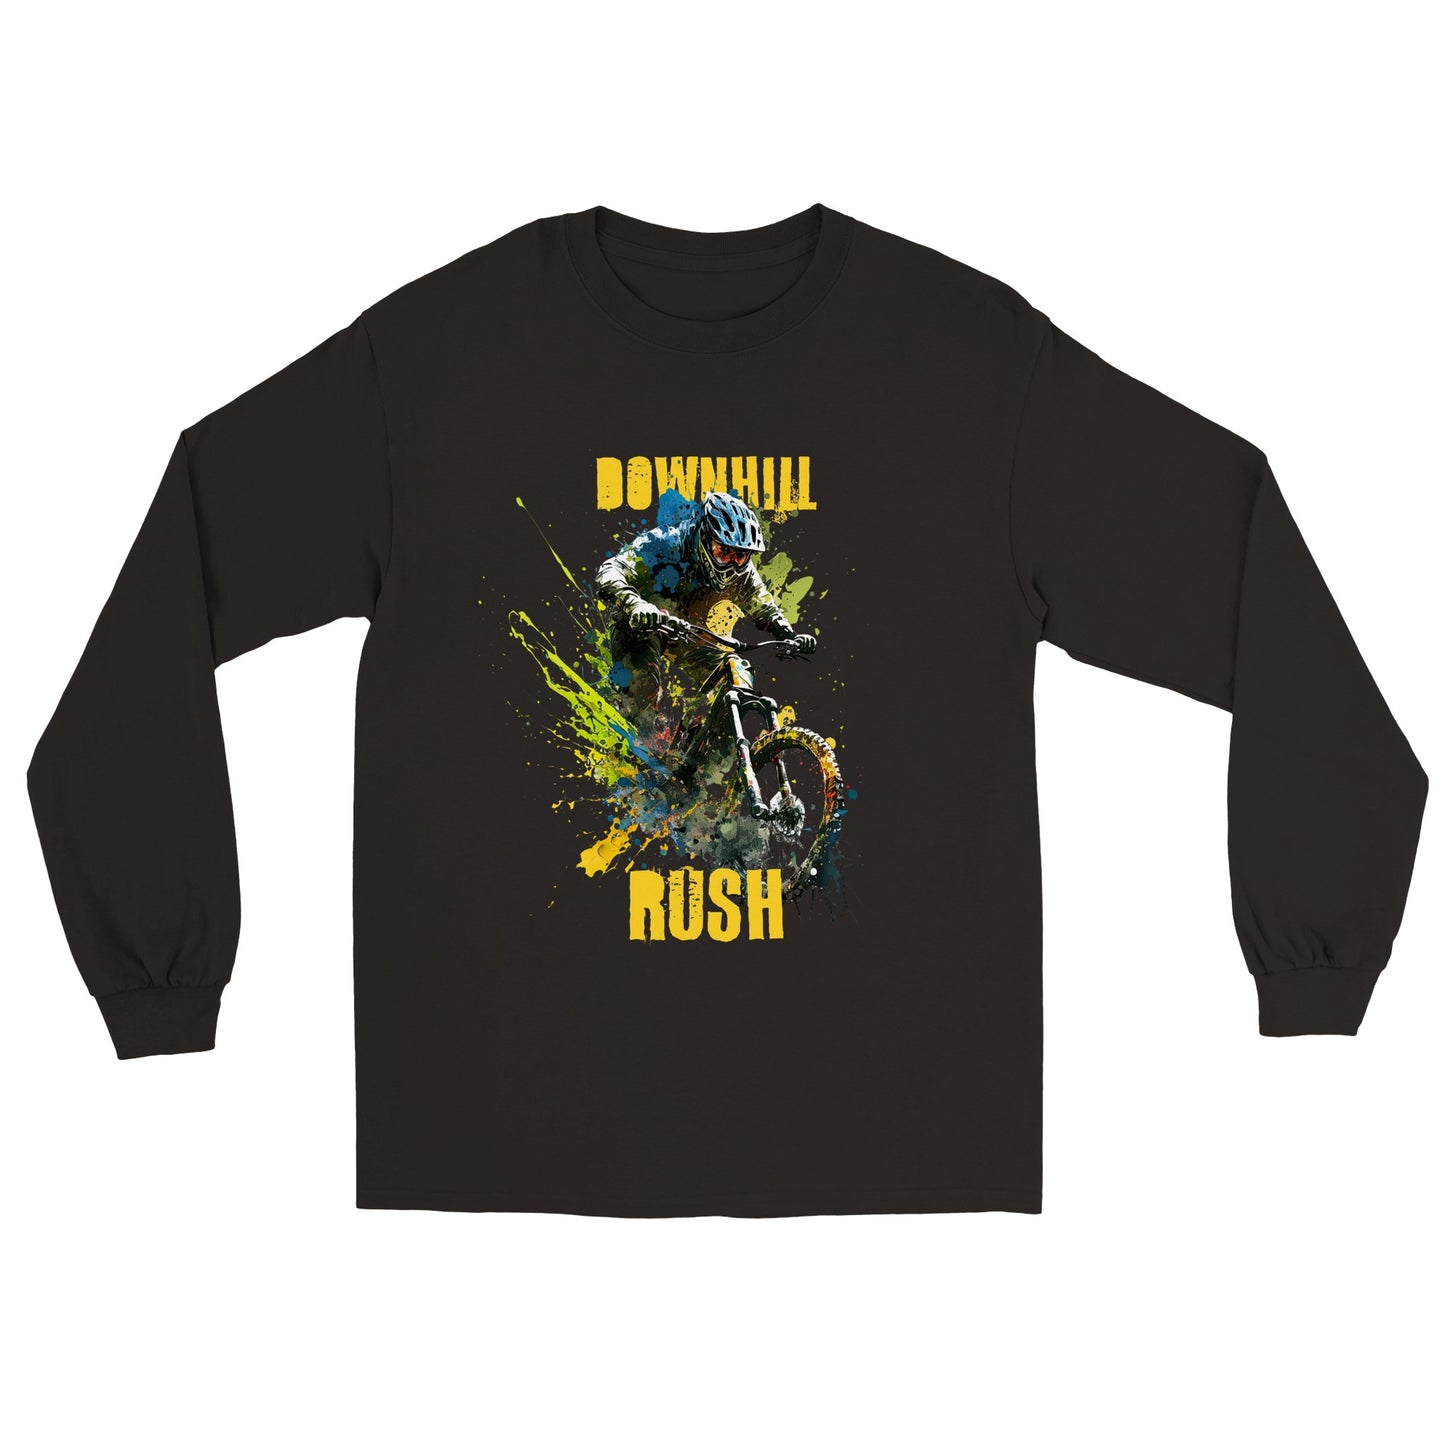 Black long sleeve t-shirt with Downhill Rush Mountain bike graphic